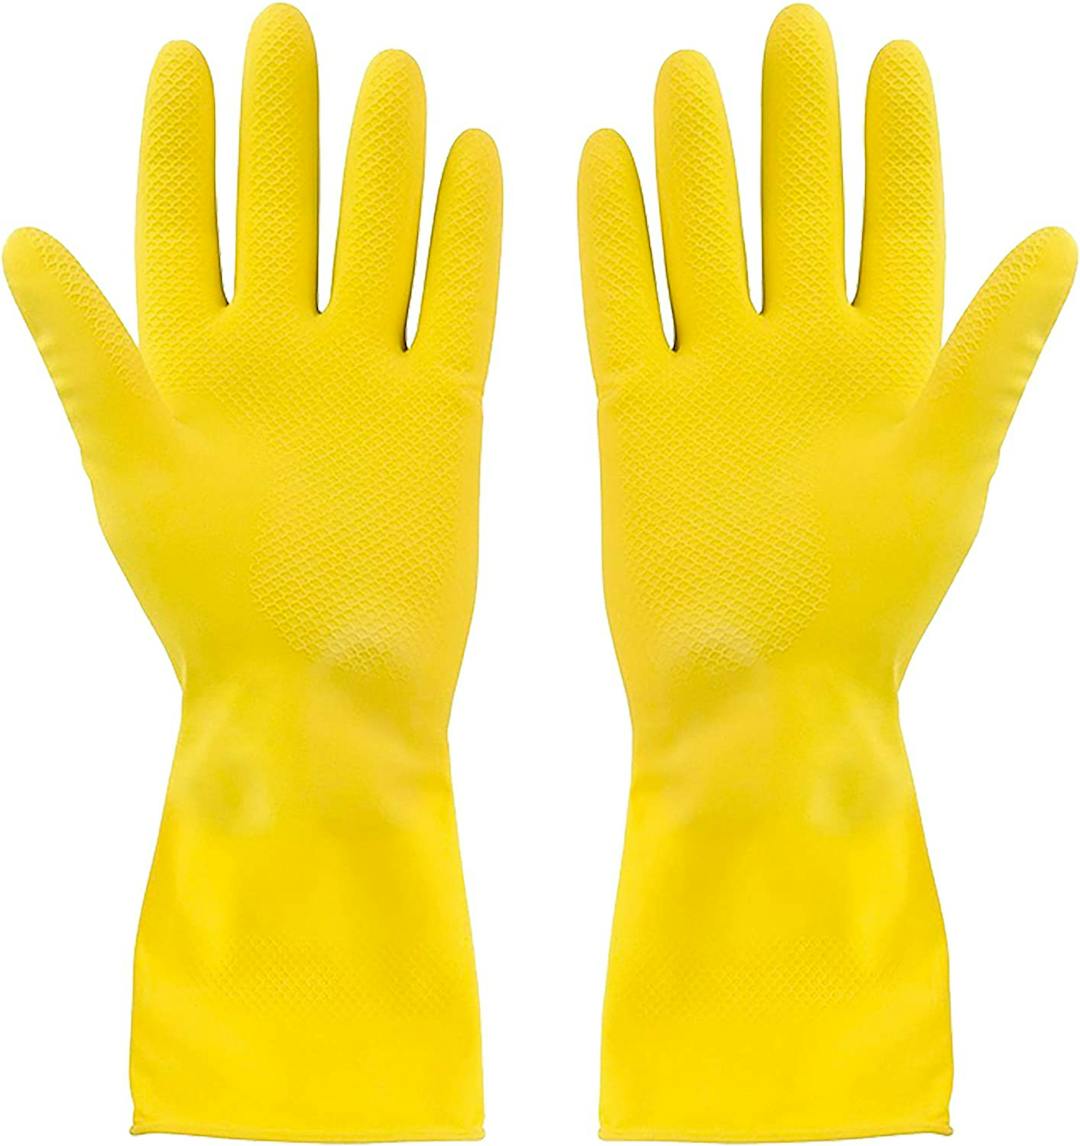 Heavy-Duty Latex Rubber Gloves